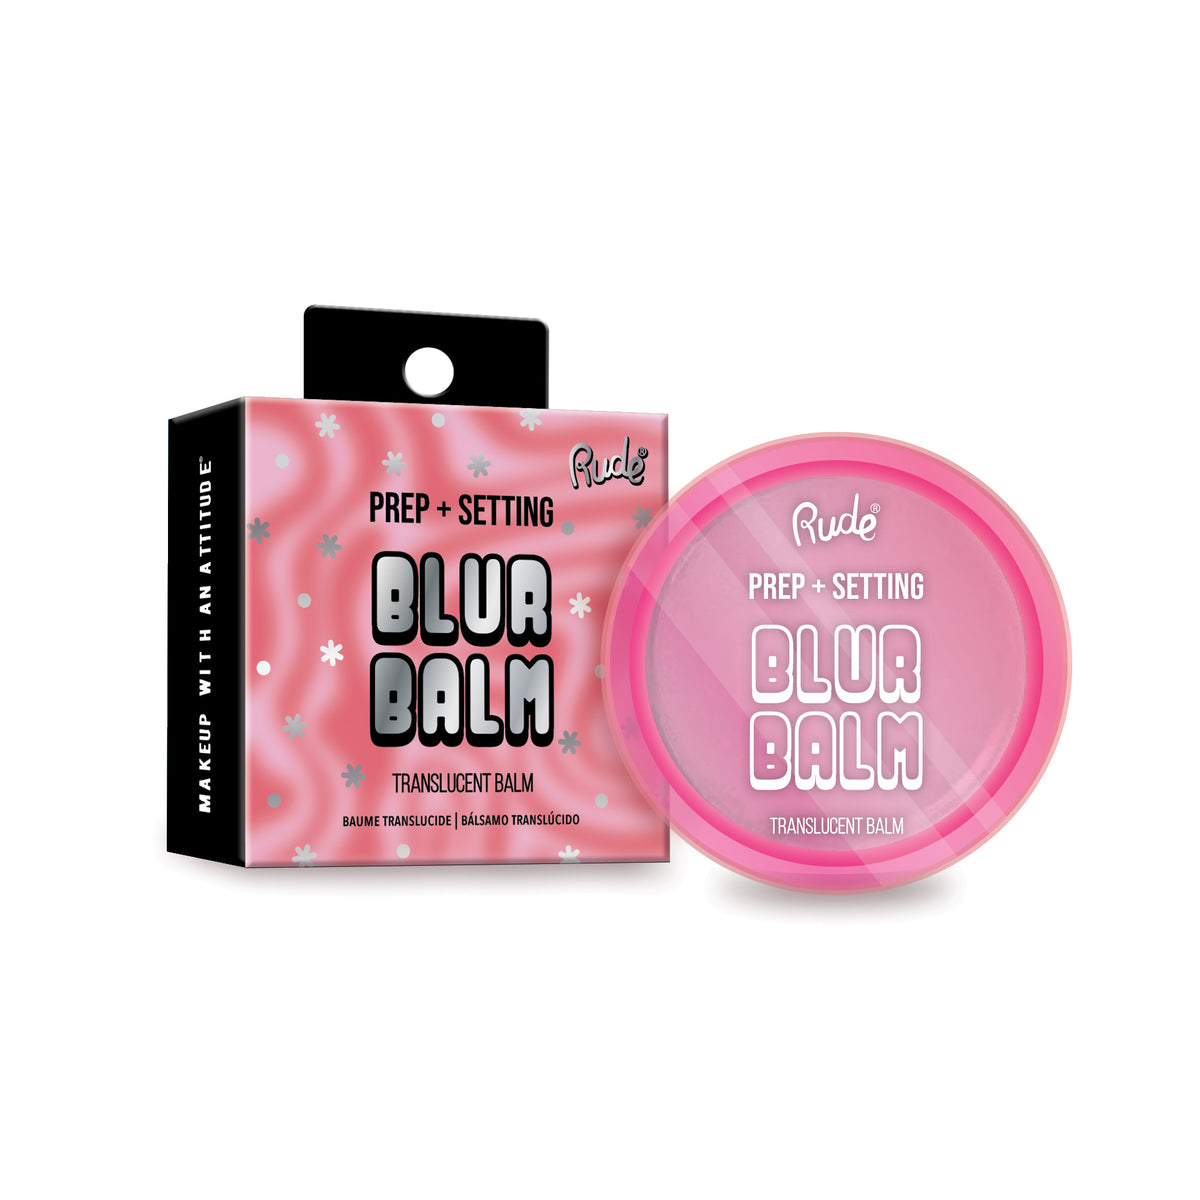 Blur Balm - Prep + Setting Translucent Balm